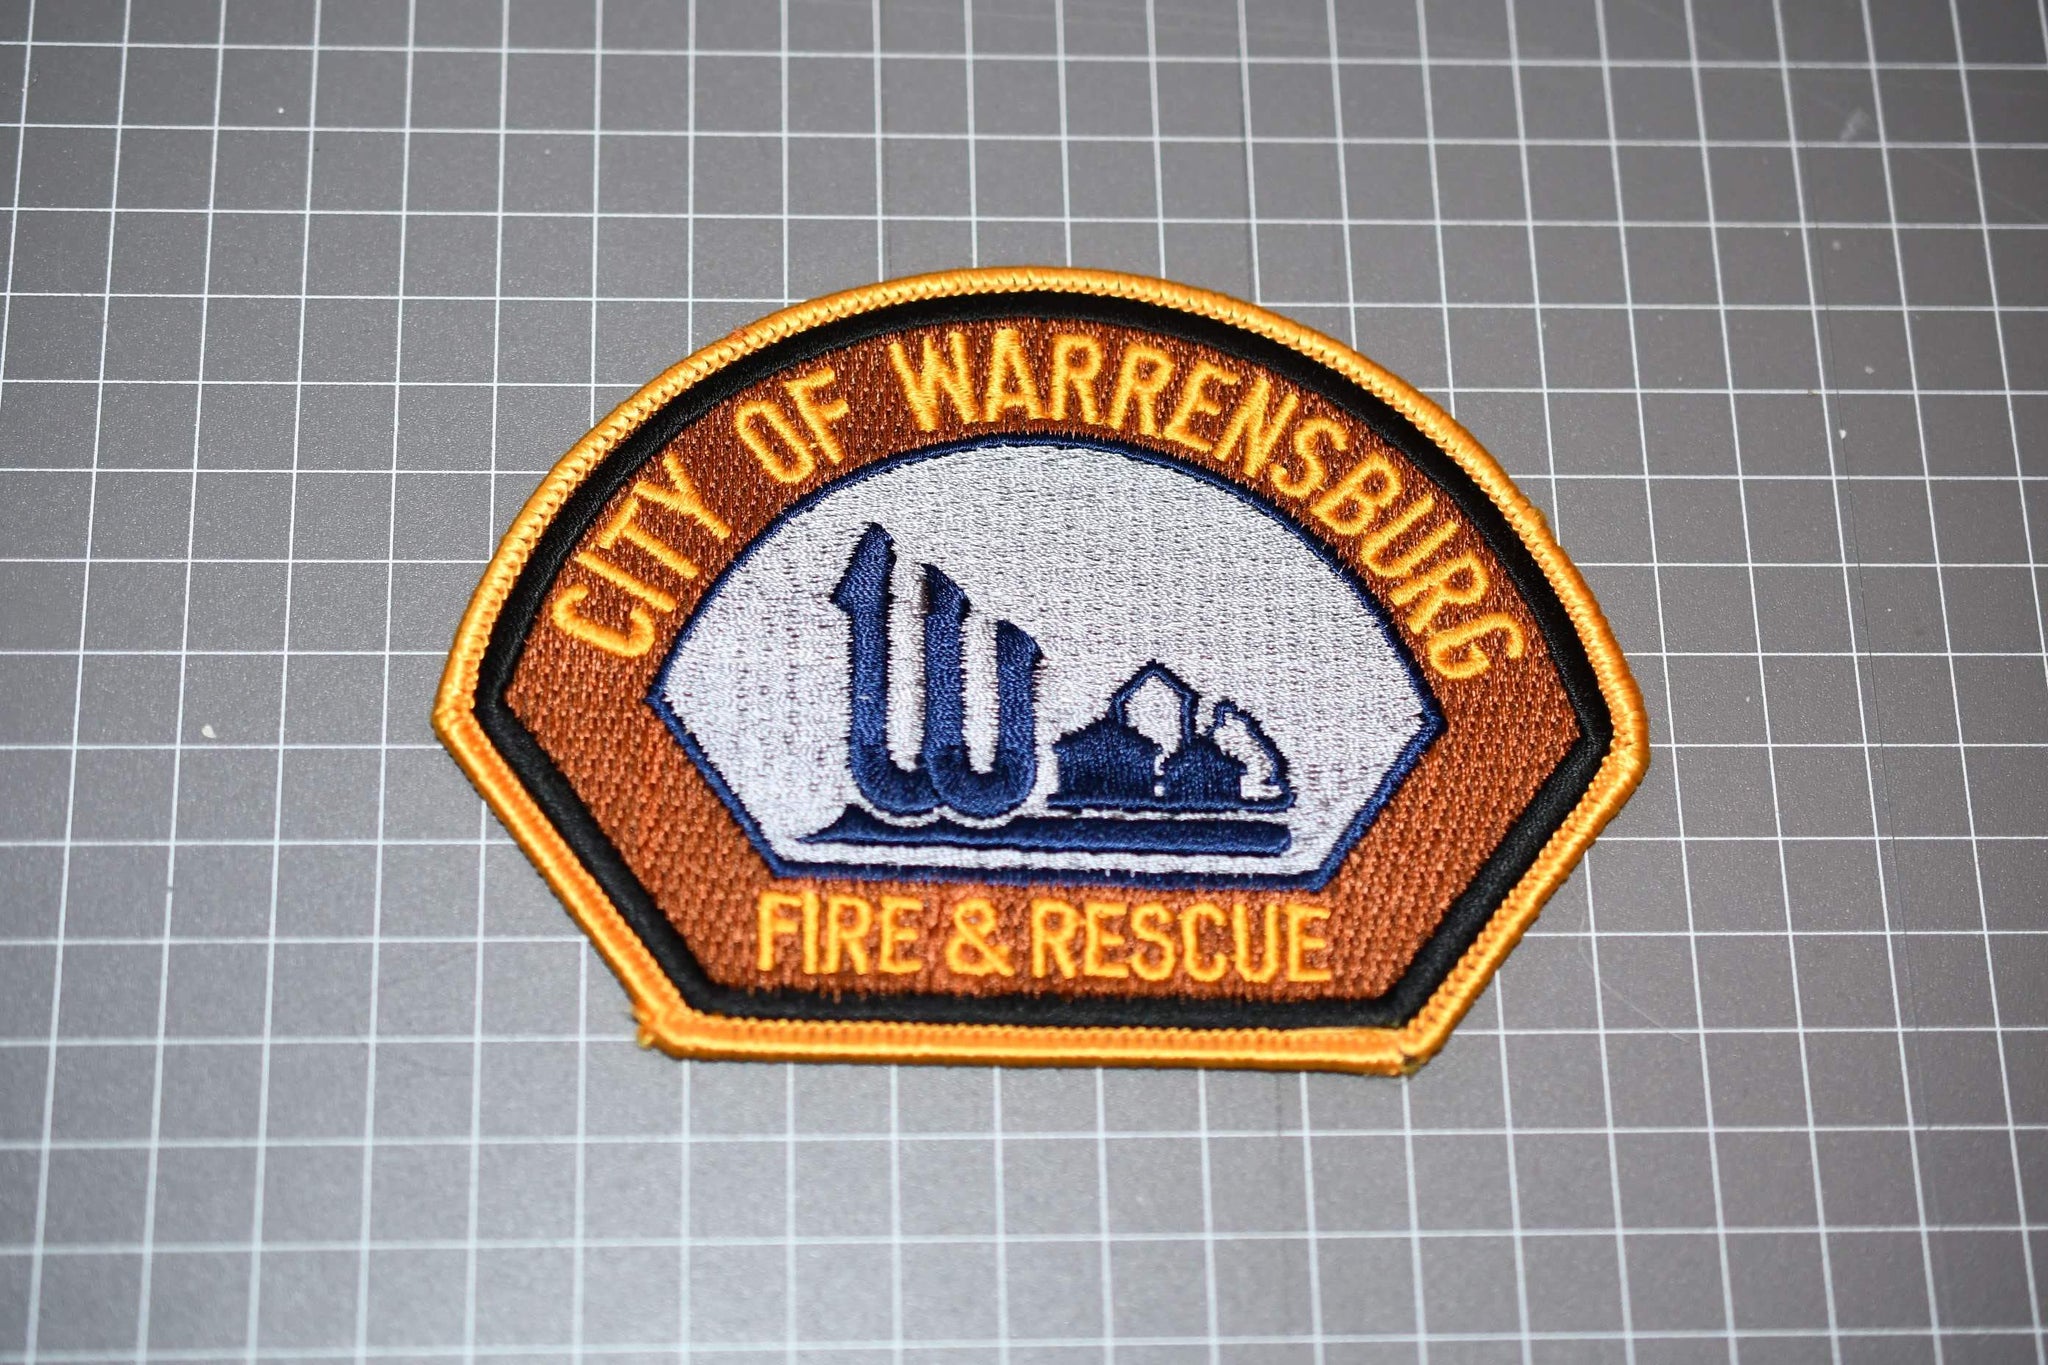 City Of Warrensburg Missouri Fire & Rescue Patch (U.S. Fire Patches)